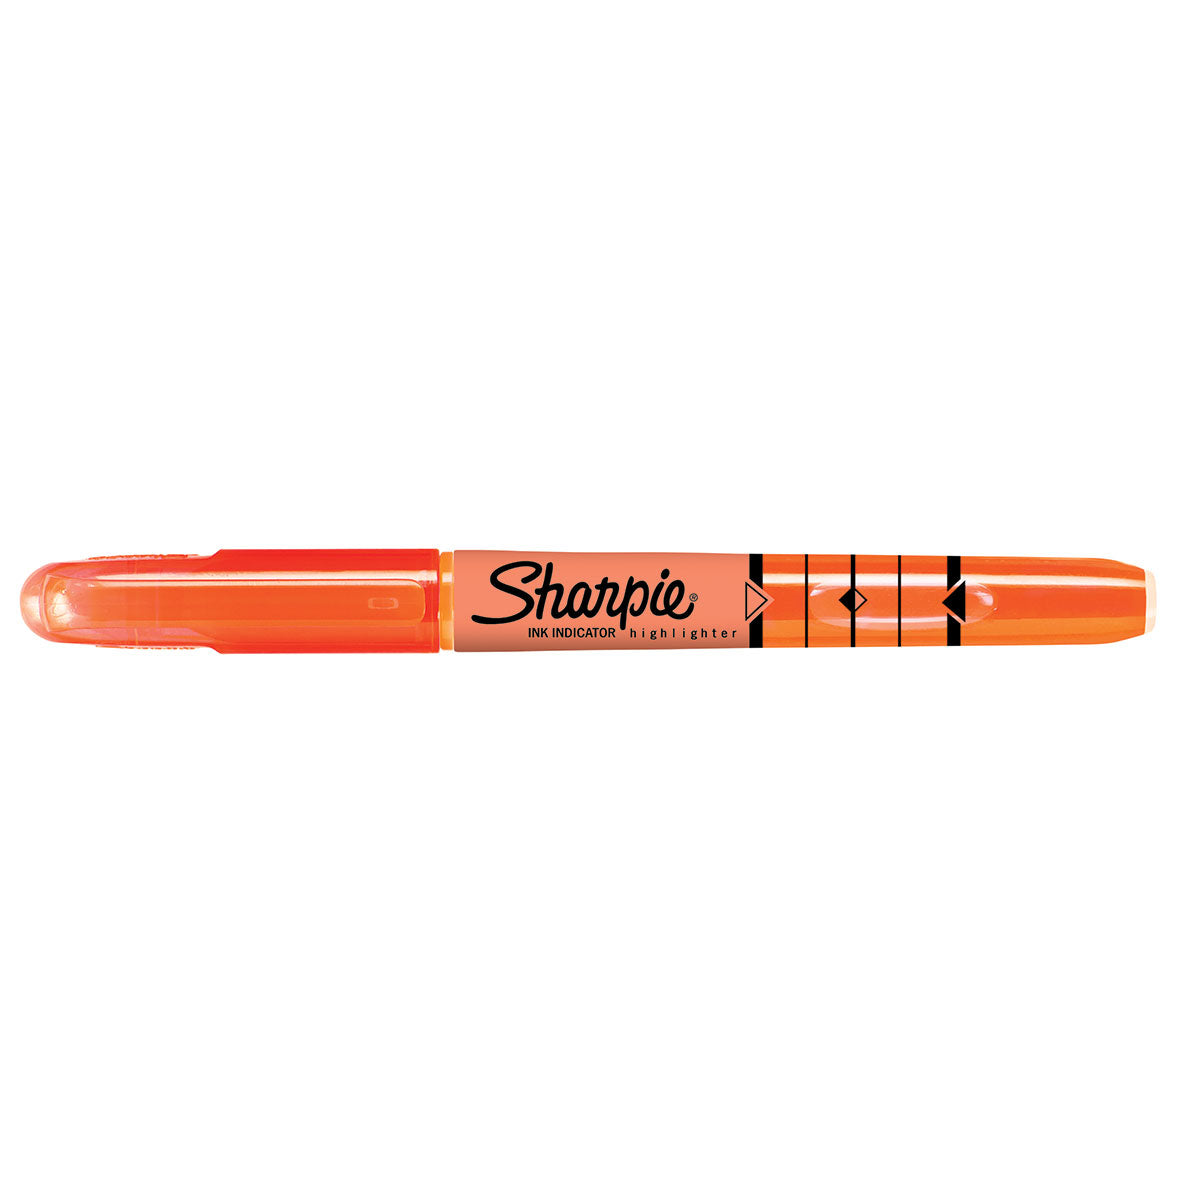 Sharpie Orange Highlighter Narrow Chisel Tip with Ink Indicator and Pocket clip  Sharpie Highlighter